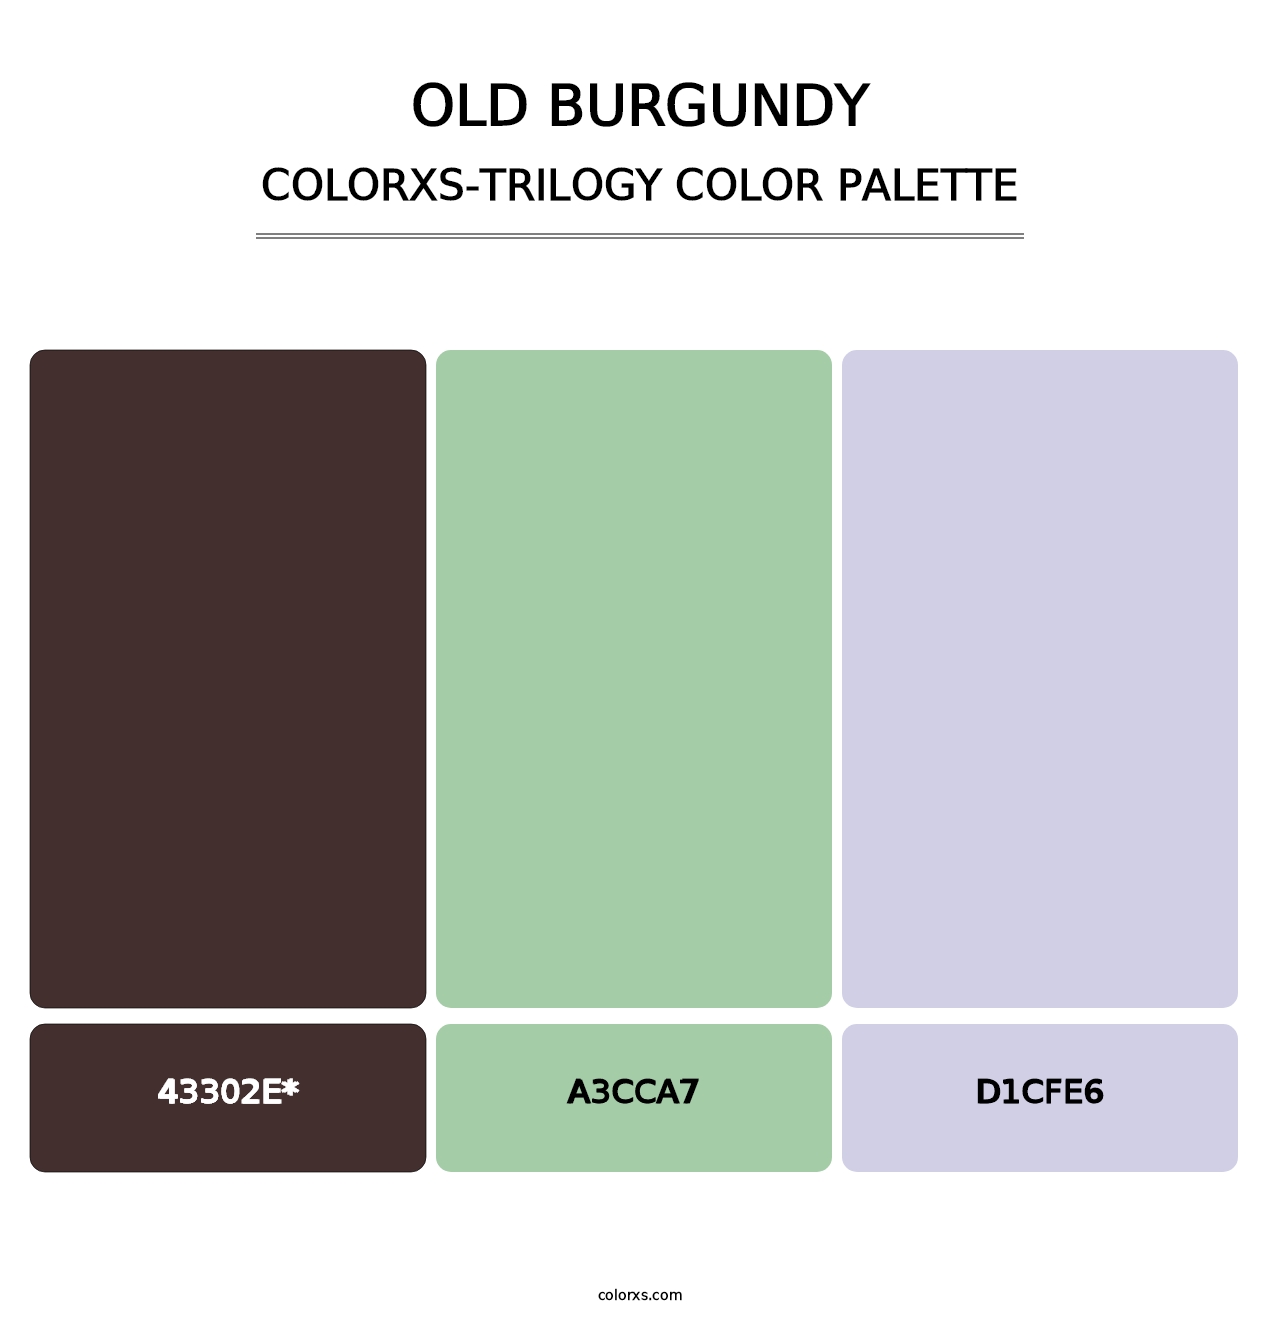 Old Burgundy - Colorxs Trilogy Palette